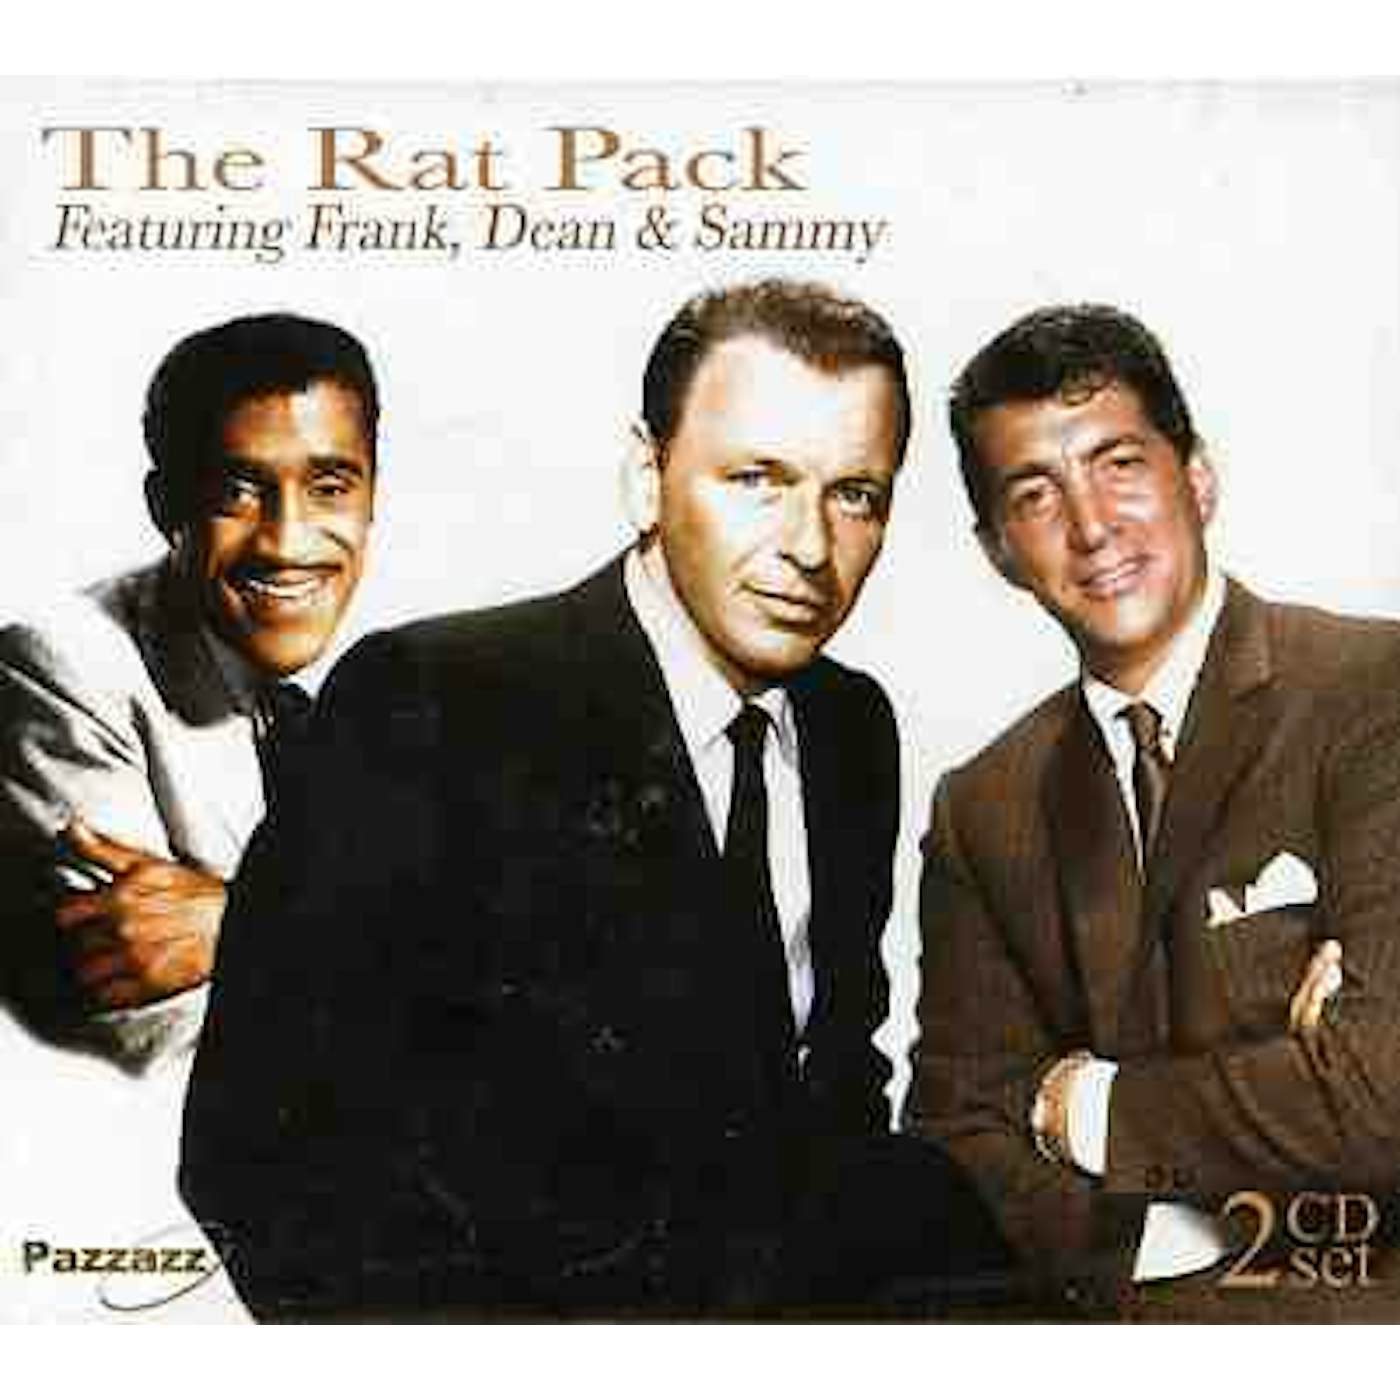 Far pack. Frank Dean. Rat Pack.